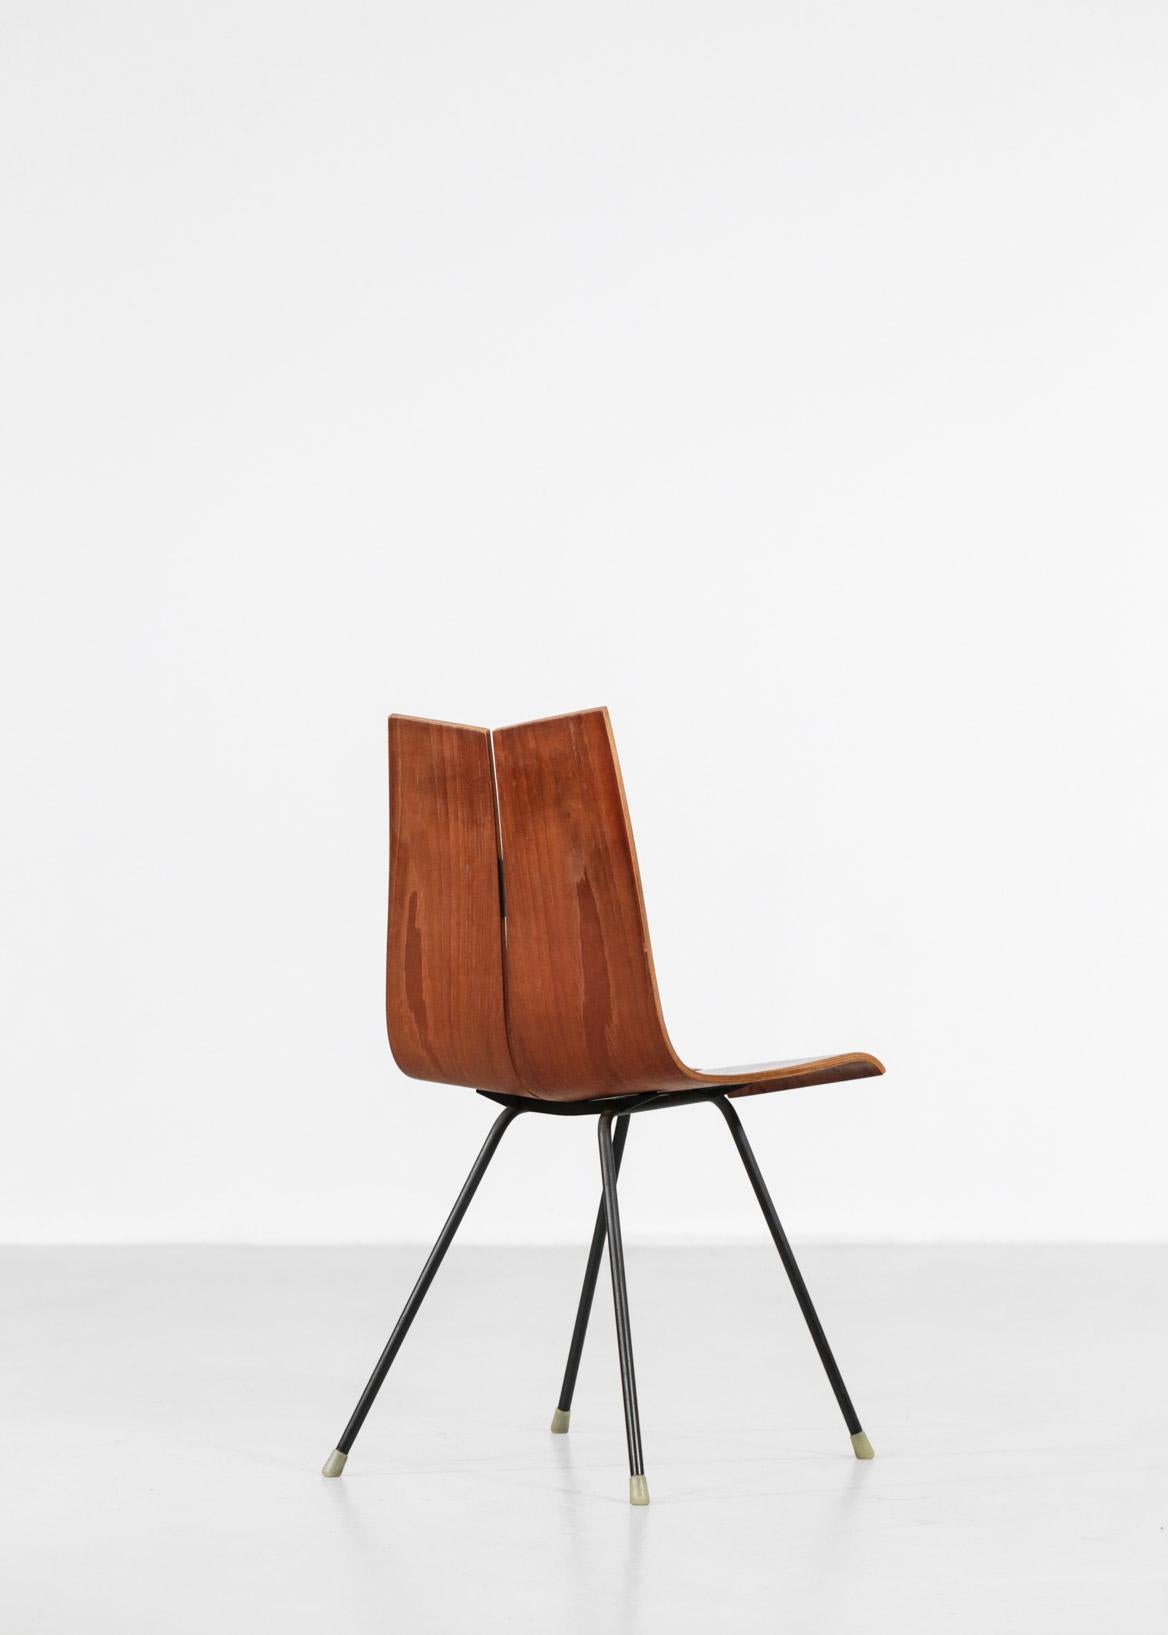 GA chair by Hans Bellmann, Suisse Design, 1960s For Sale 3